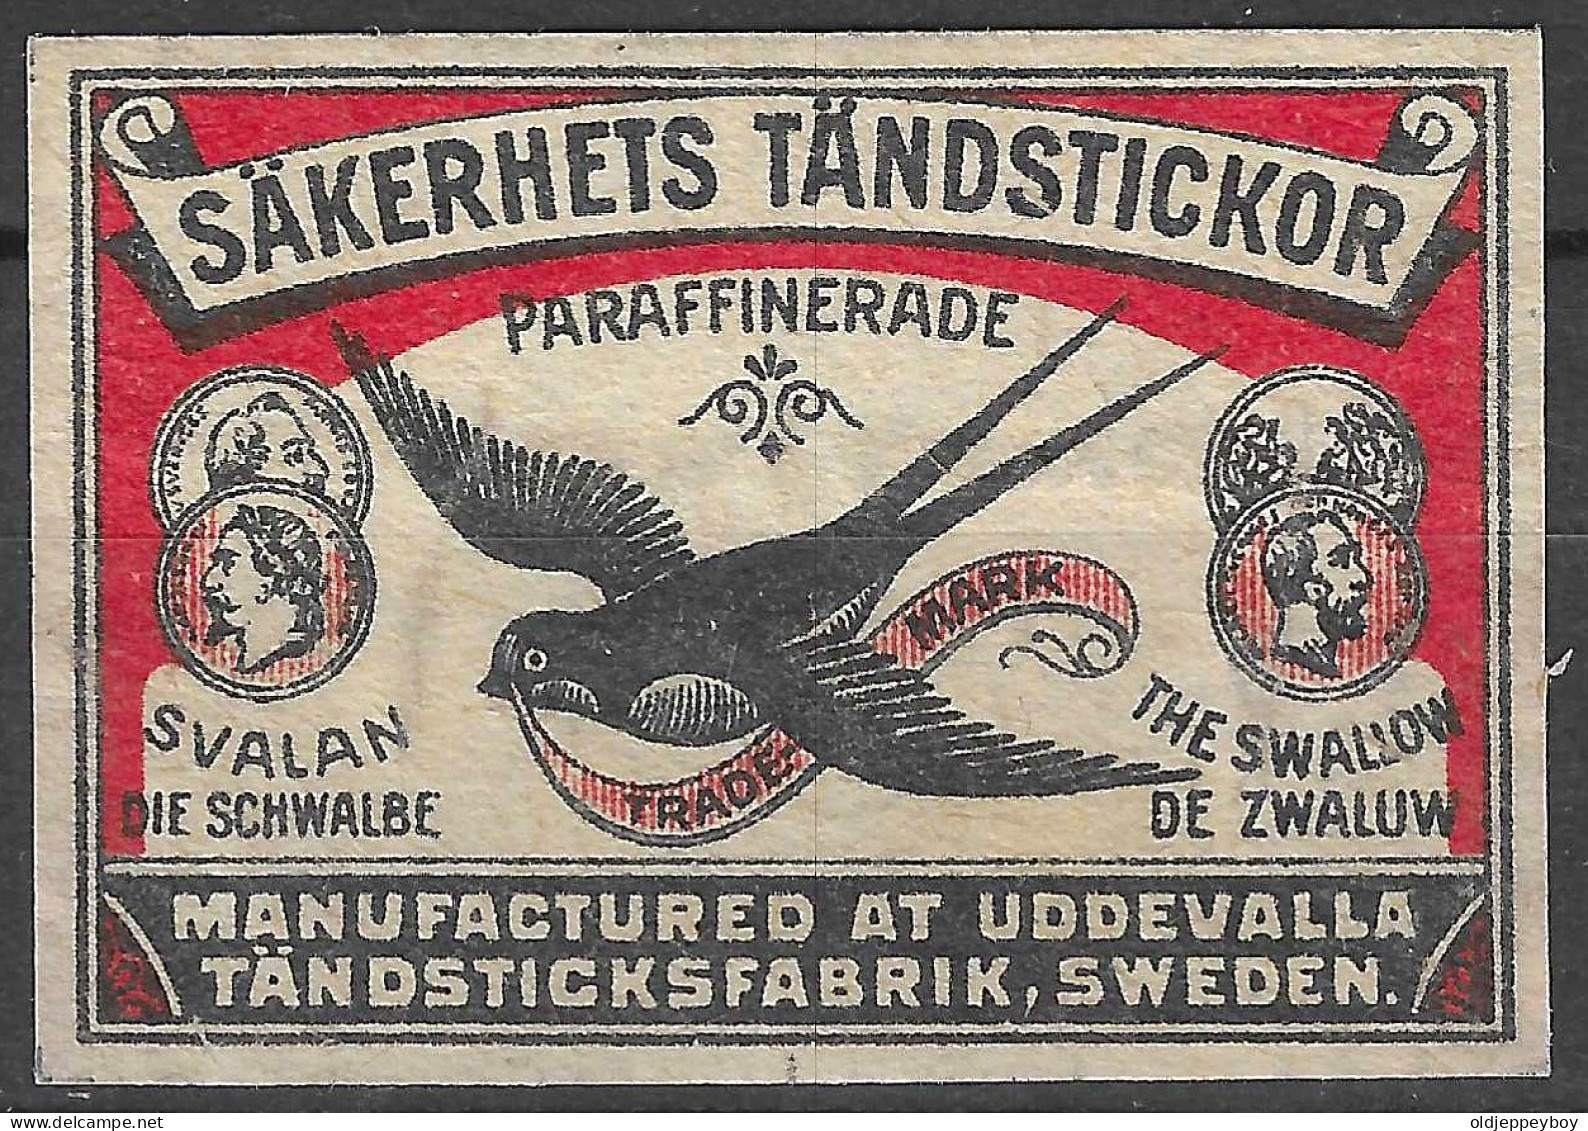 MADE AT UDDEVALLA TANDSTICKSFABRIK SWEDEN VINTAGE Phillumeny MATCHBOX LABELSAKERHETS TANDSTICKOR THE SWALLOW DE ZWALUW - Luciferdozen - Etiketten